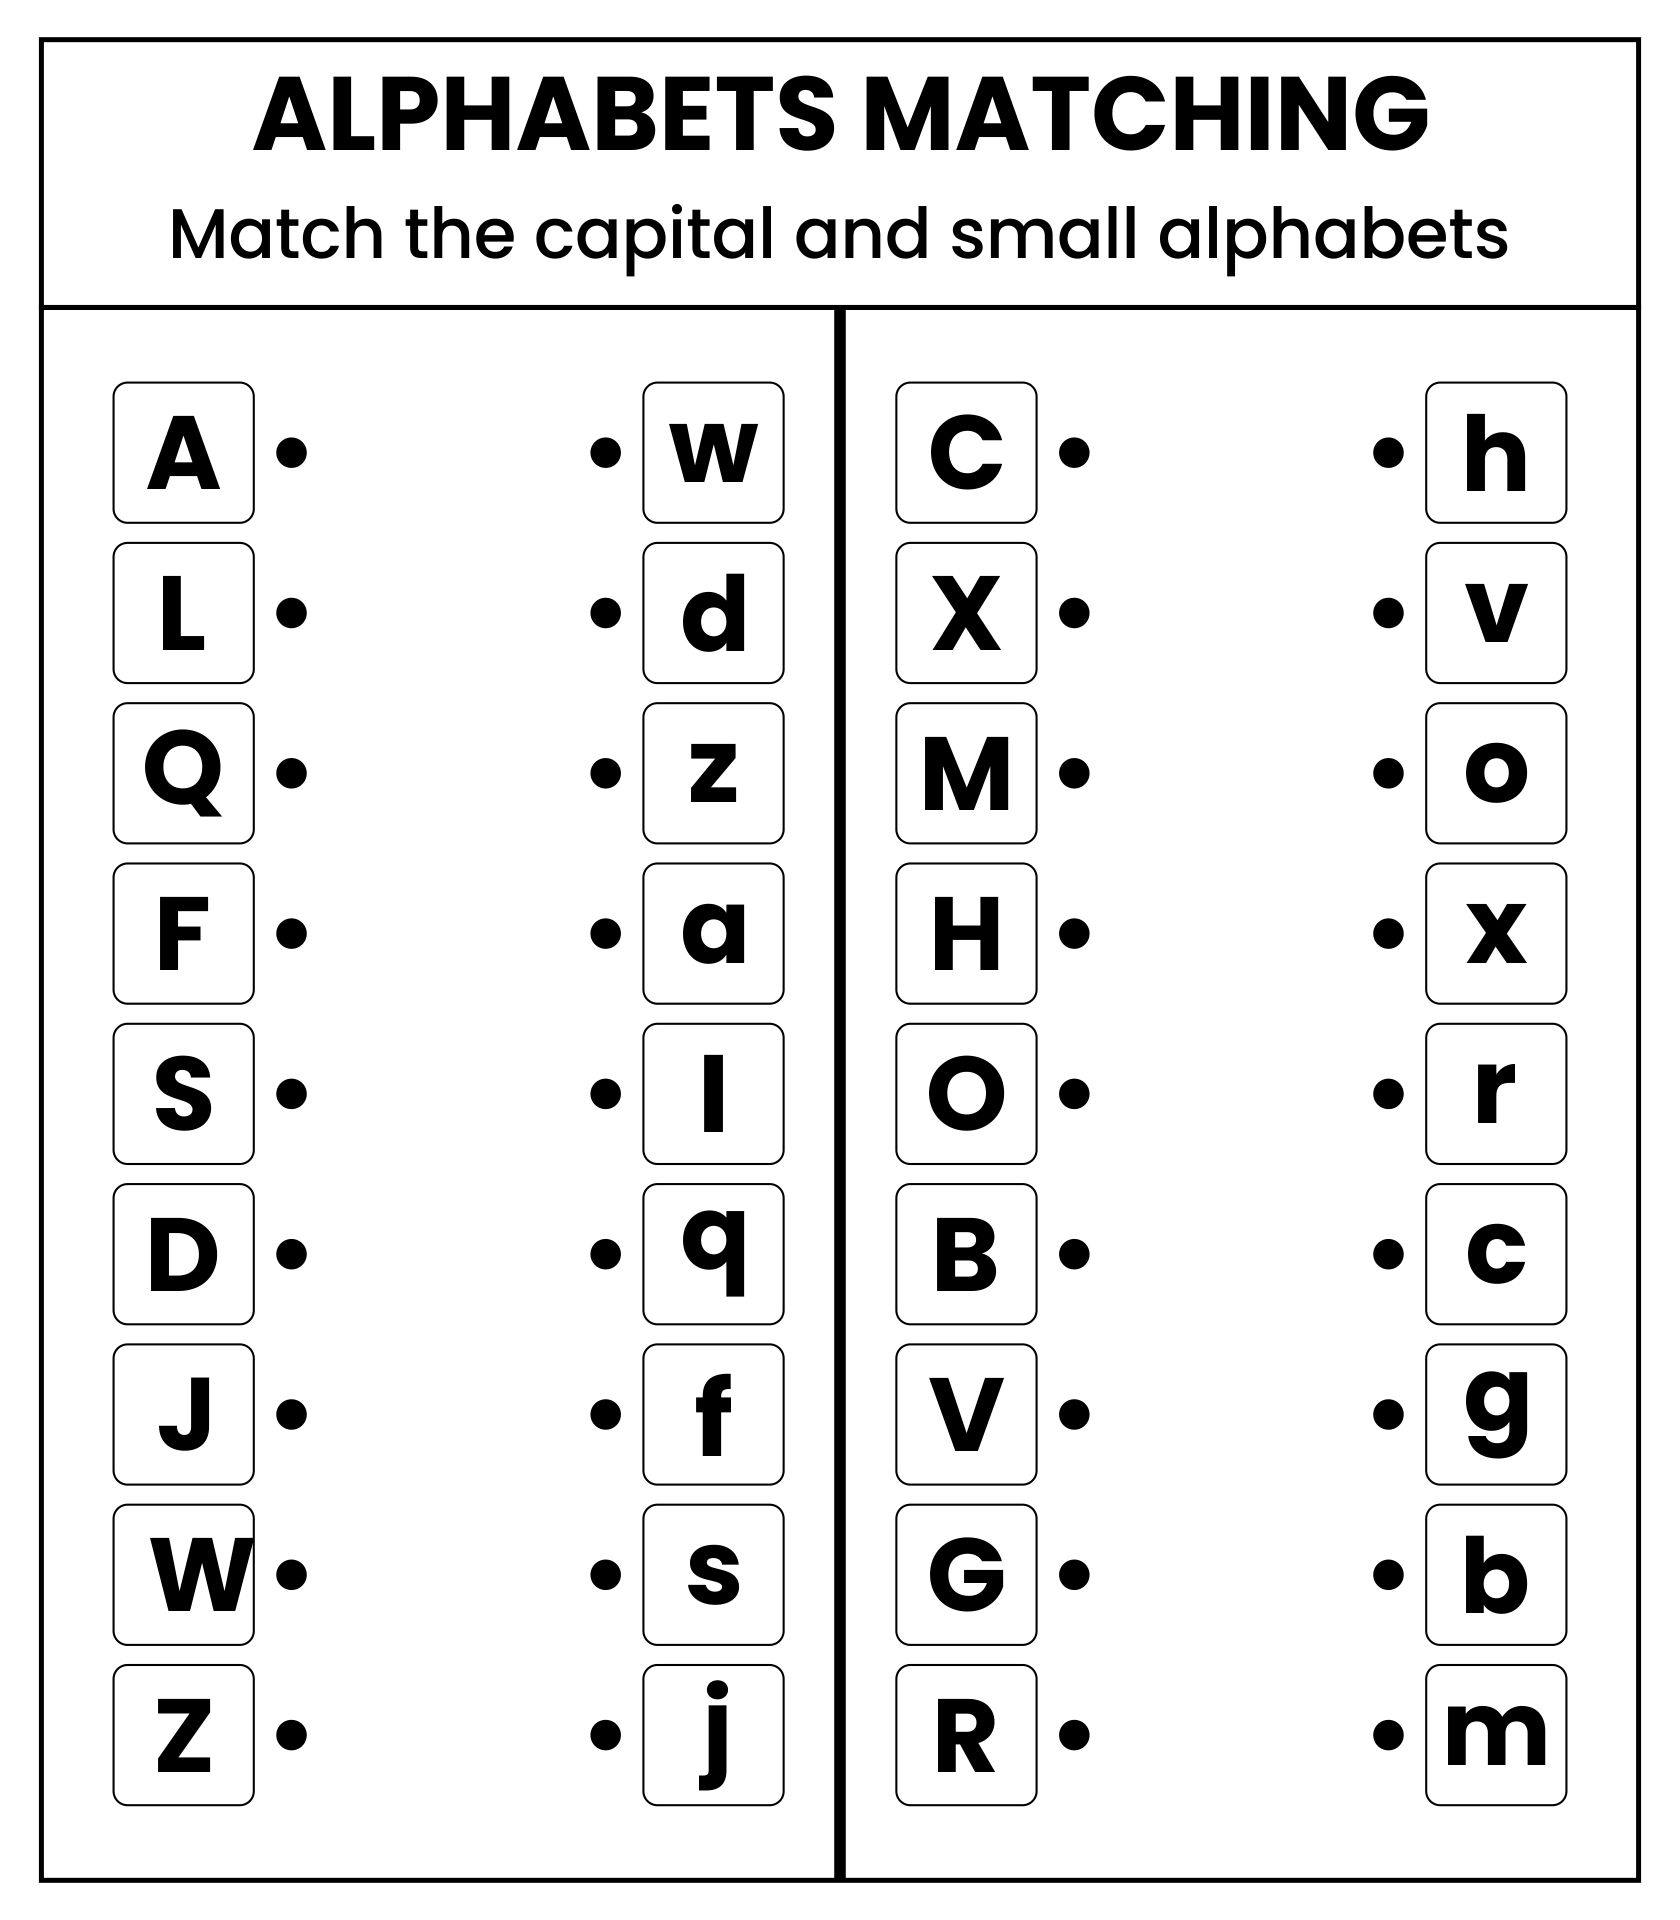 Alphabet Matching Worksheets - 10 Free PDF Printables | Printablee